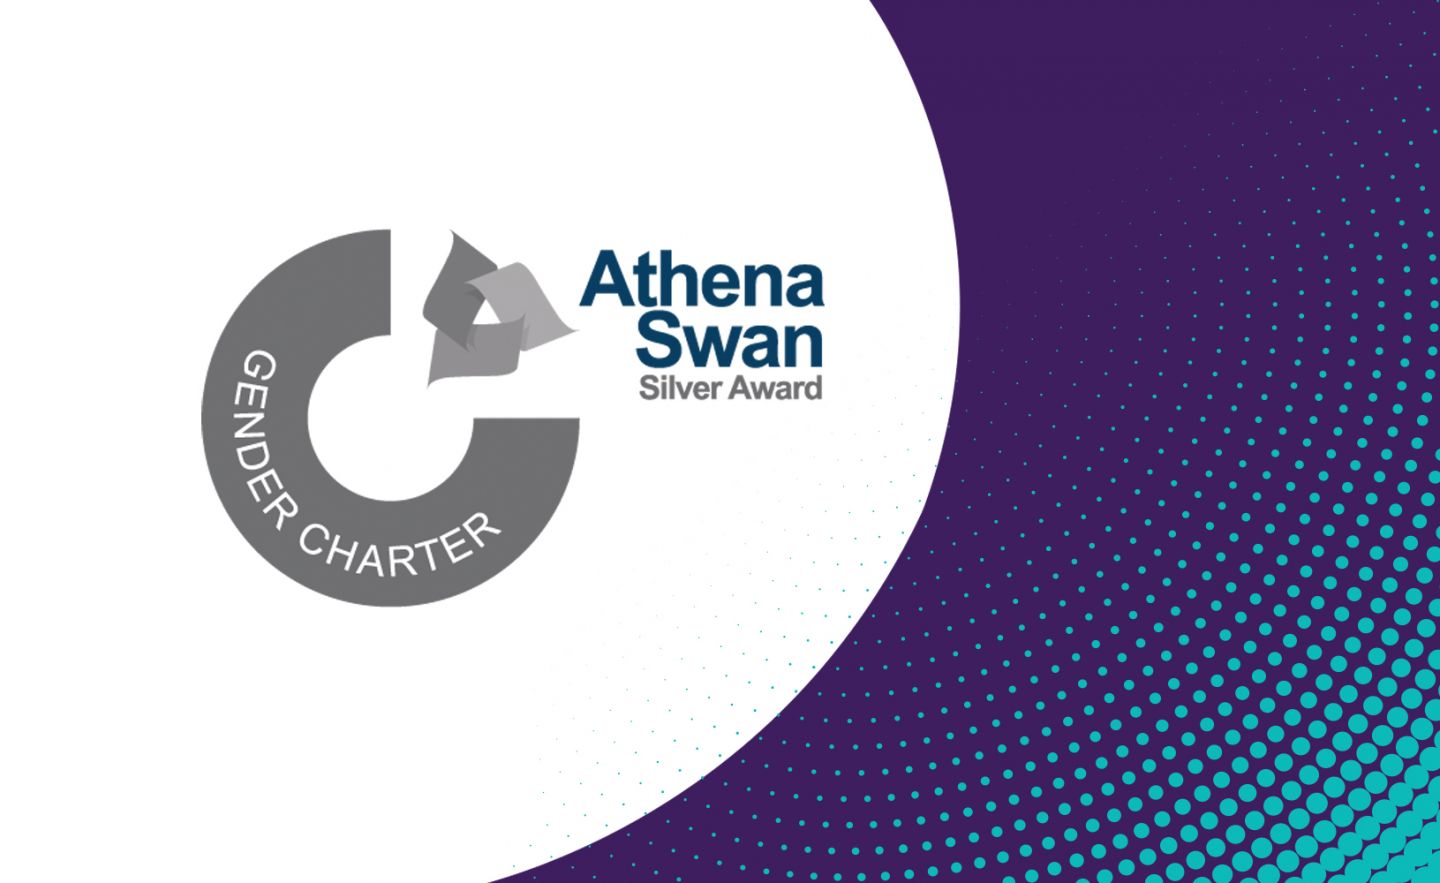 Athena Swan logo with GCU graphics surrounding